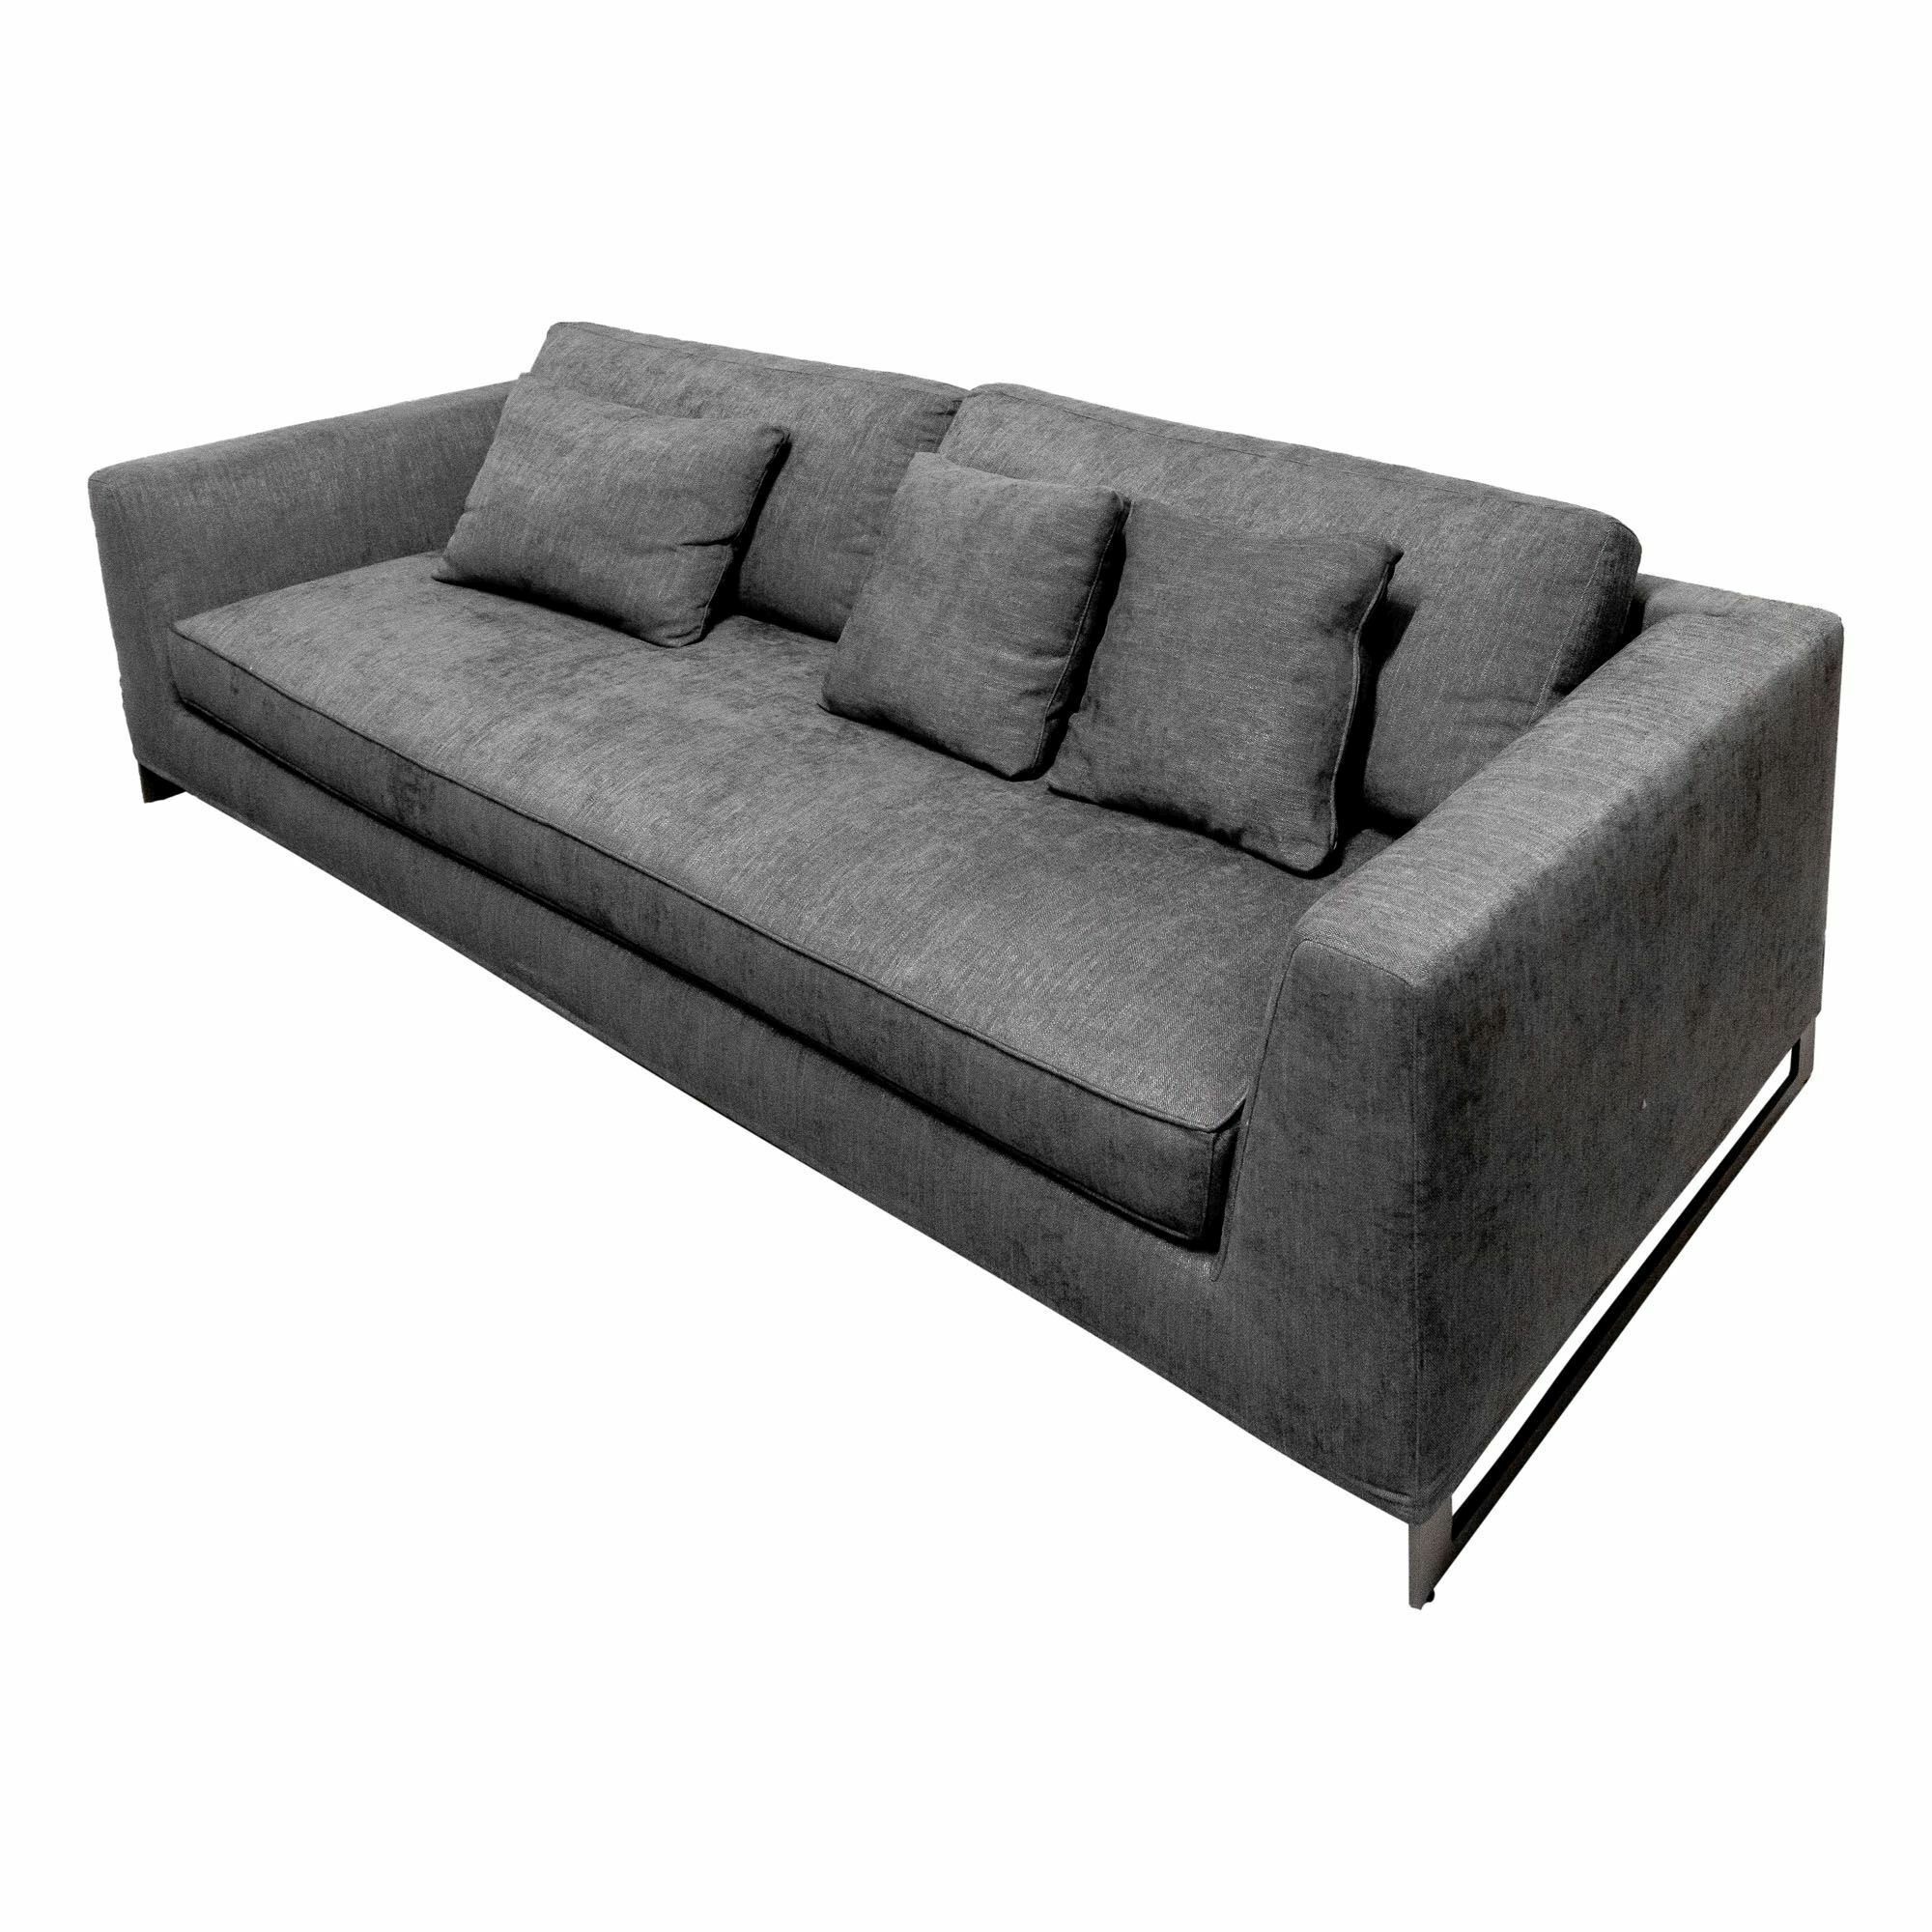 frigerio-sofa-davis-220-stoff-pastello-11-grigio-cat-super-grau-gestell-metall-schwarz-verchromt-mf